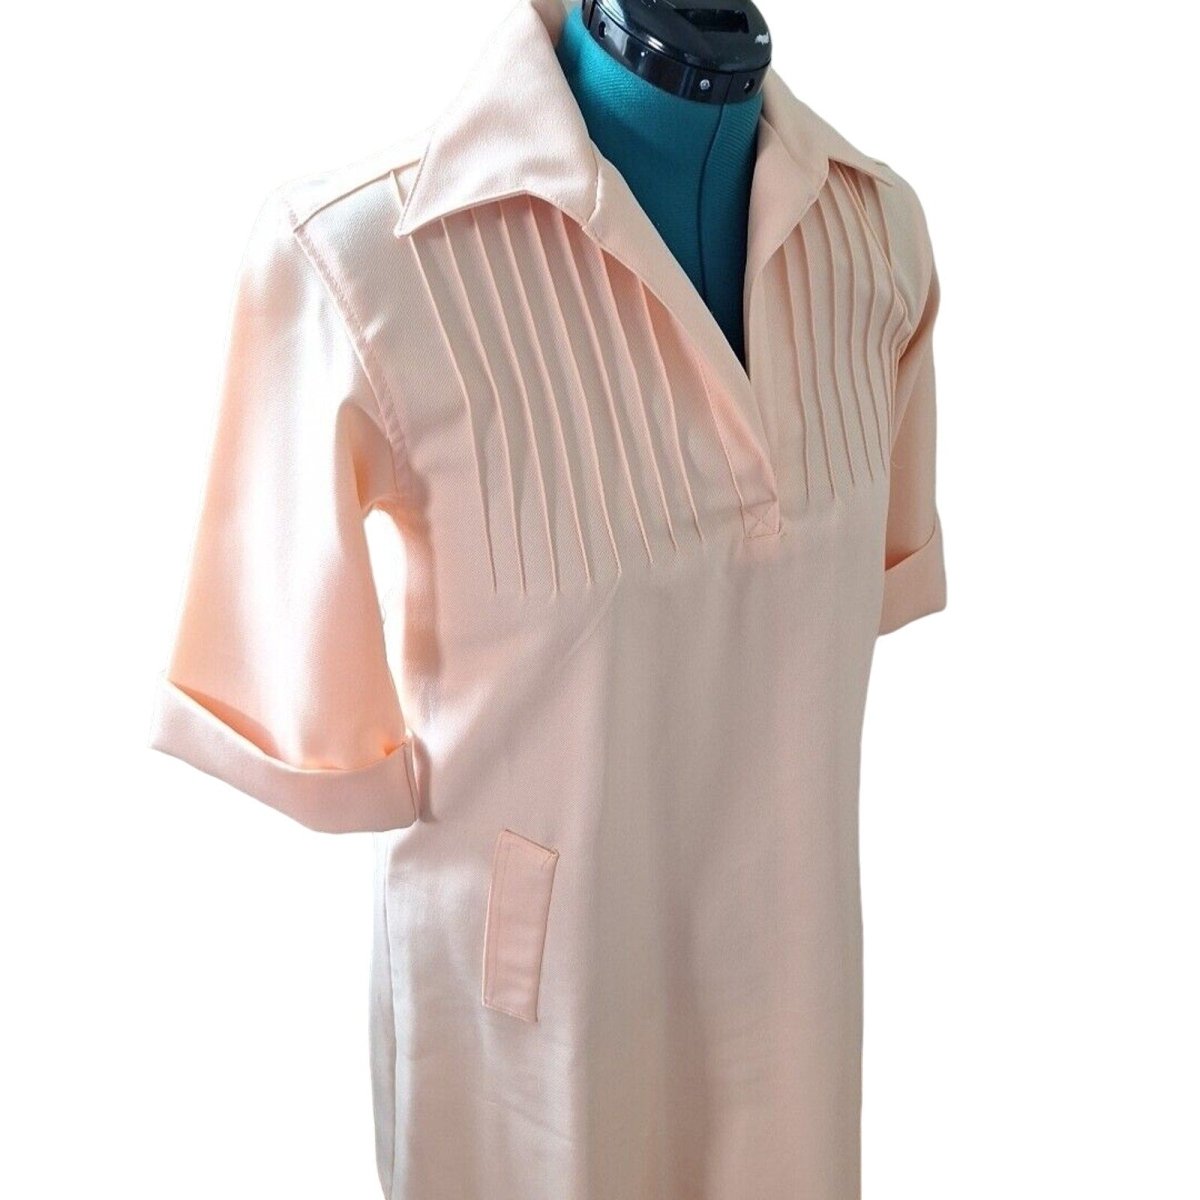 Vintage 70s Peach Polyester A-Line Dress Size Medium Women - themallvintage The Mall Vintage 1970s Dresses Mod